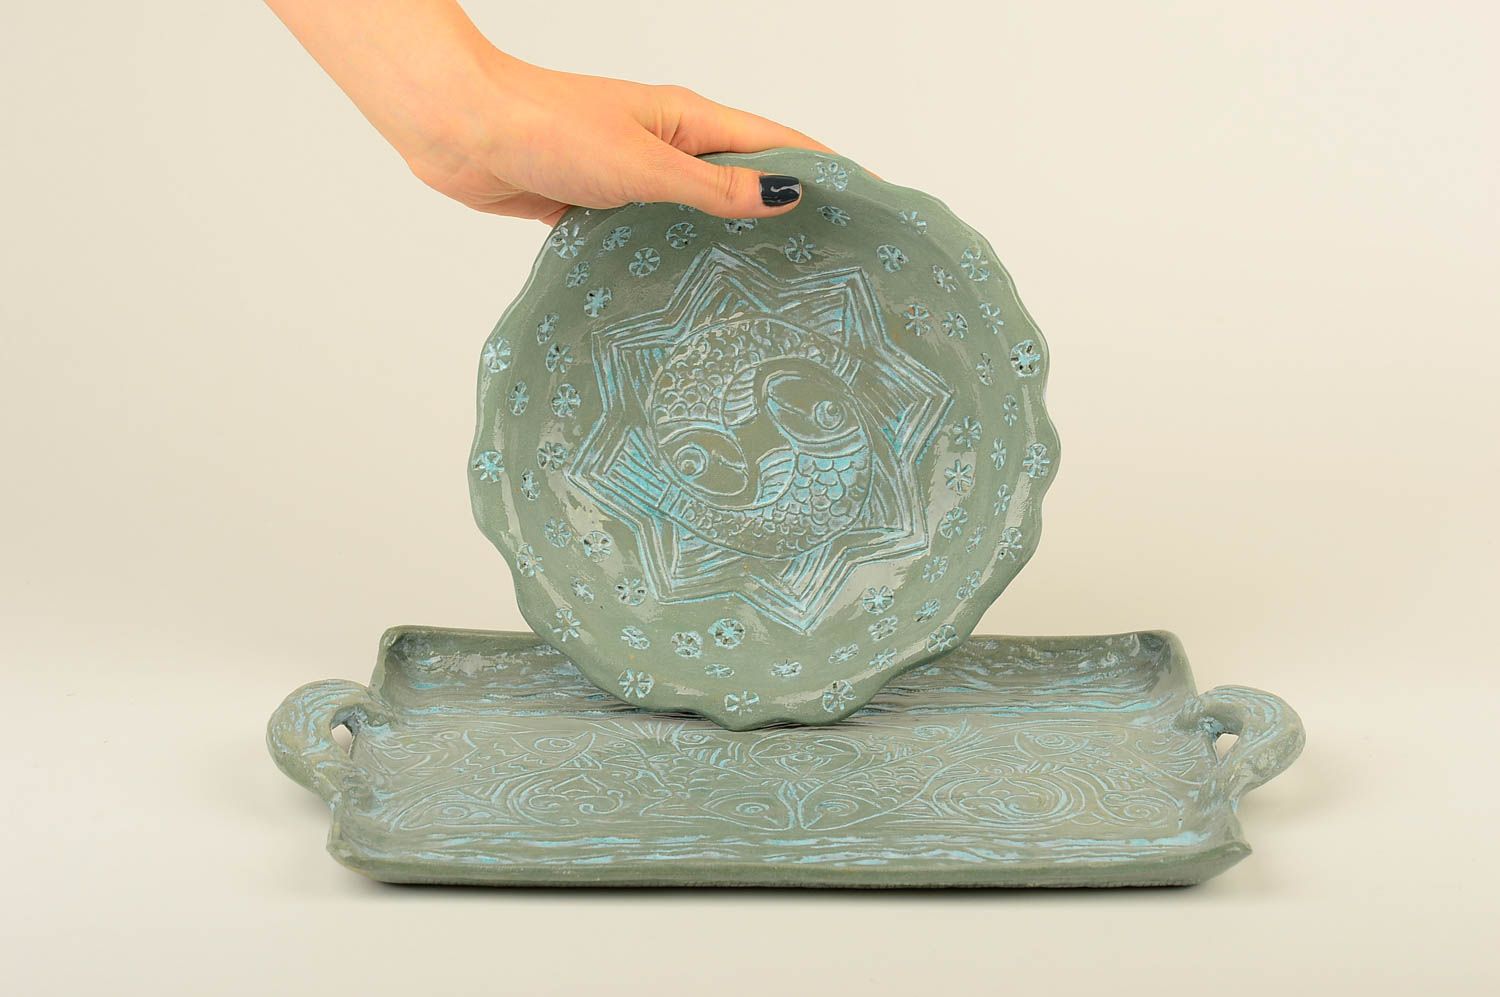 Unusual handmade ceramic bowl molded ceramic tray stylish kitchenware ideas photo 2